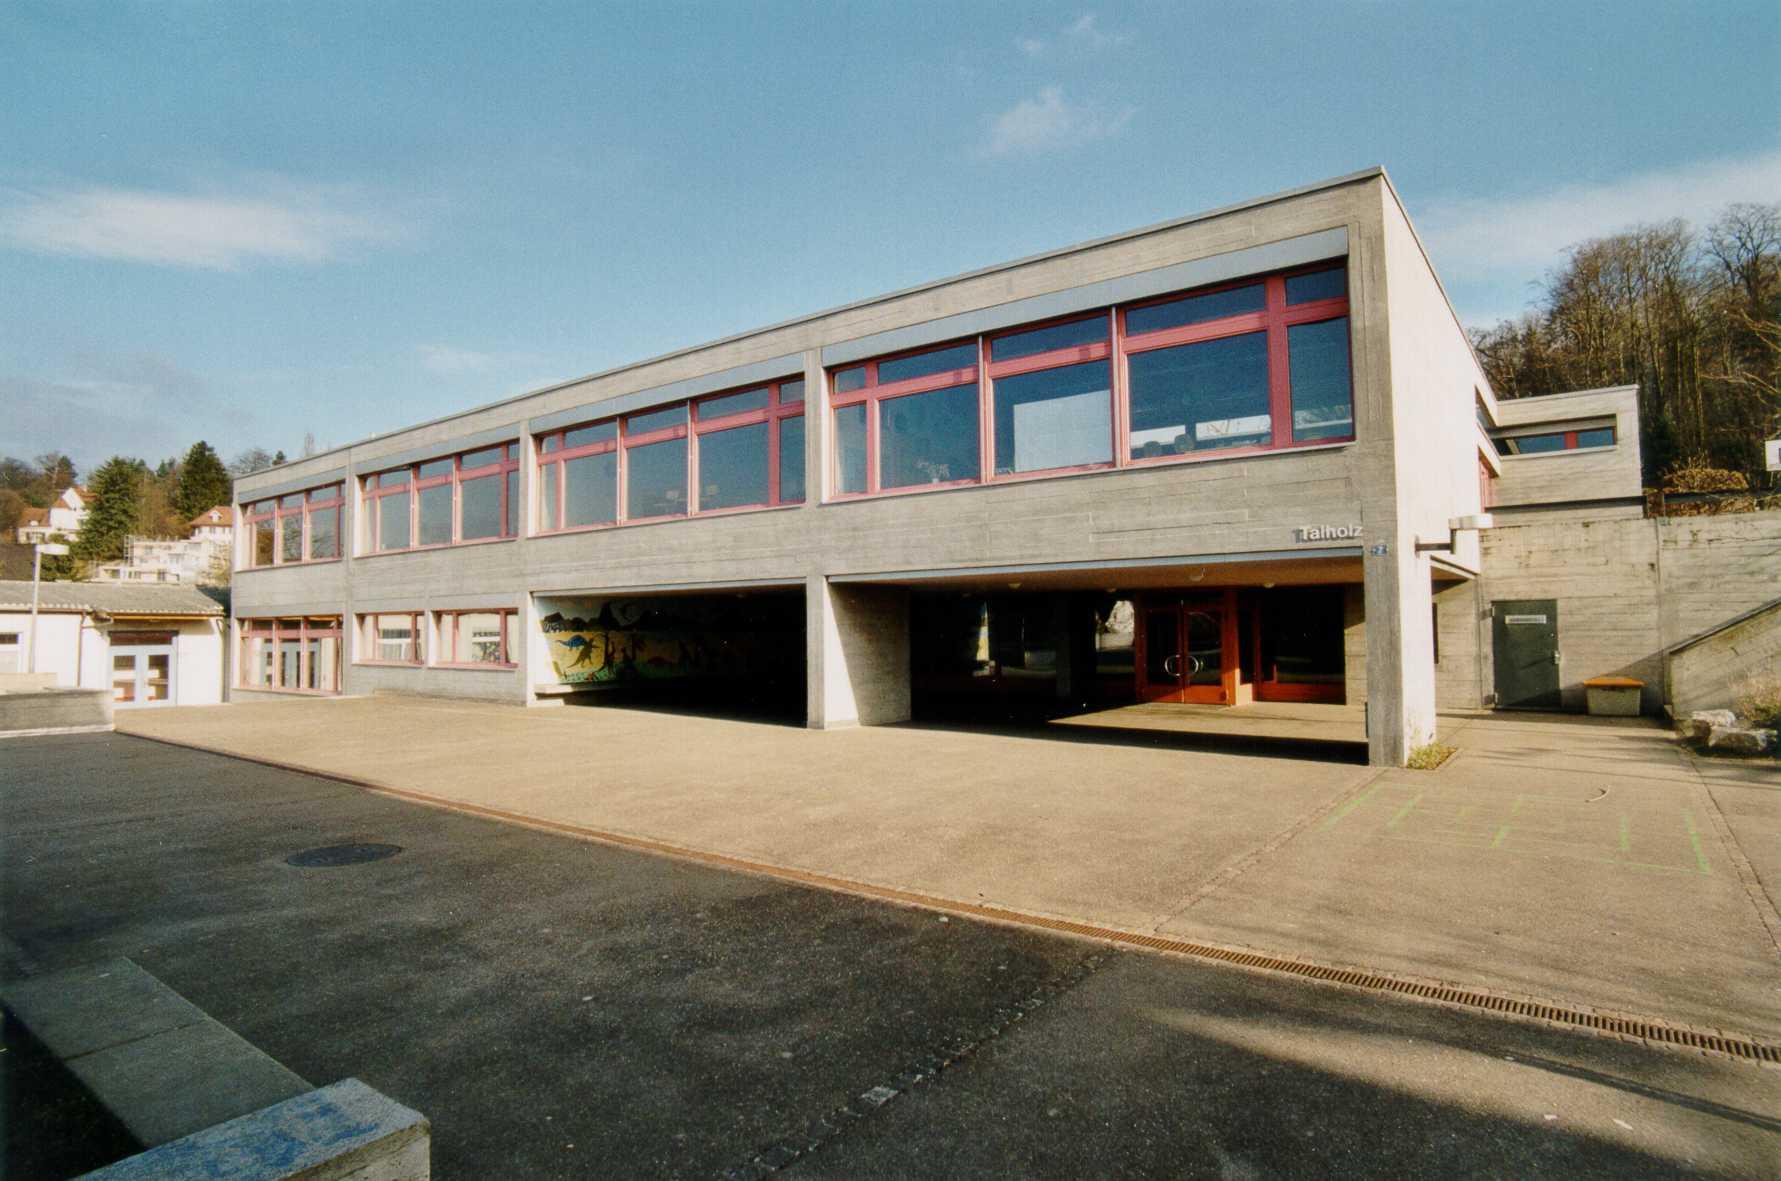 Schulhaus Talholz